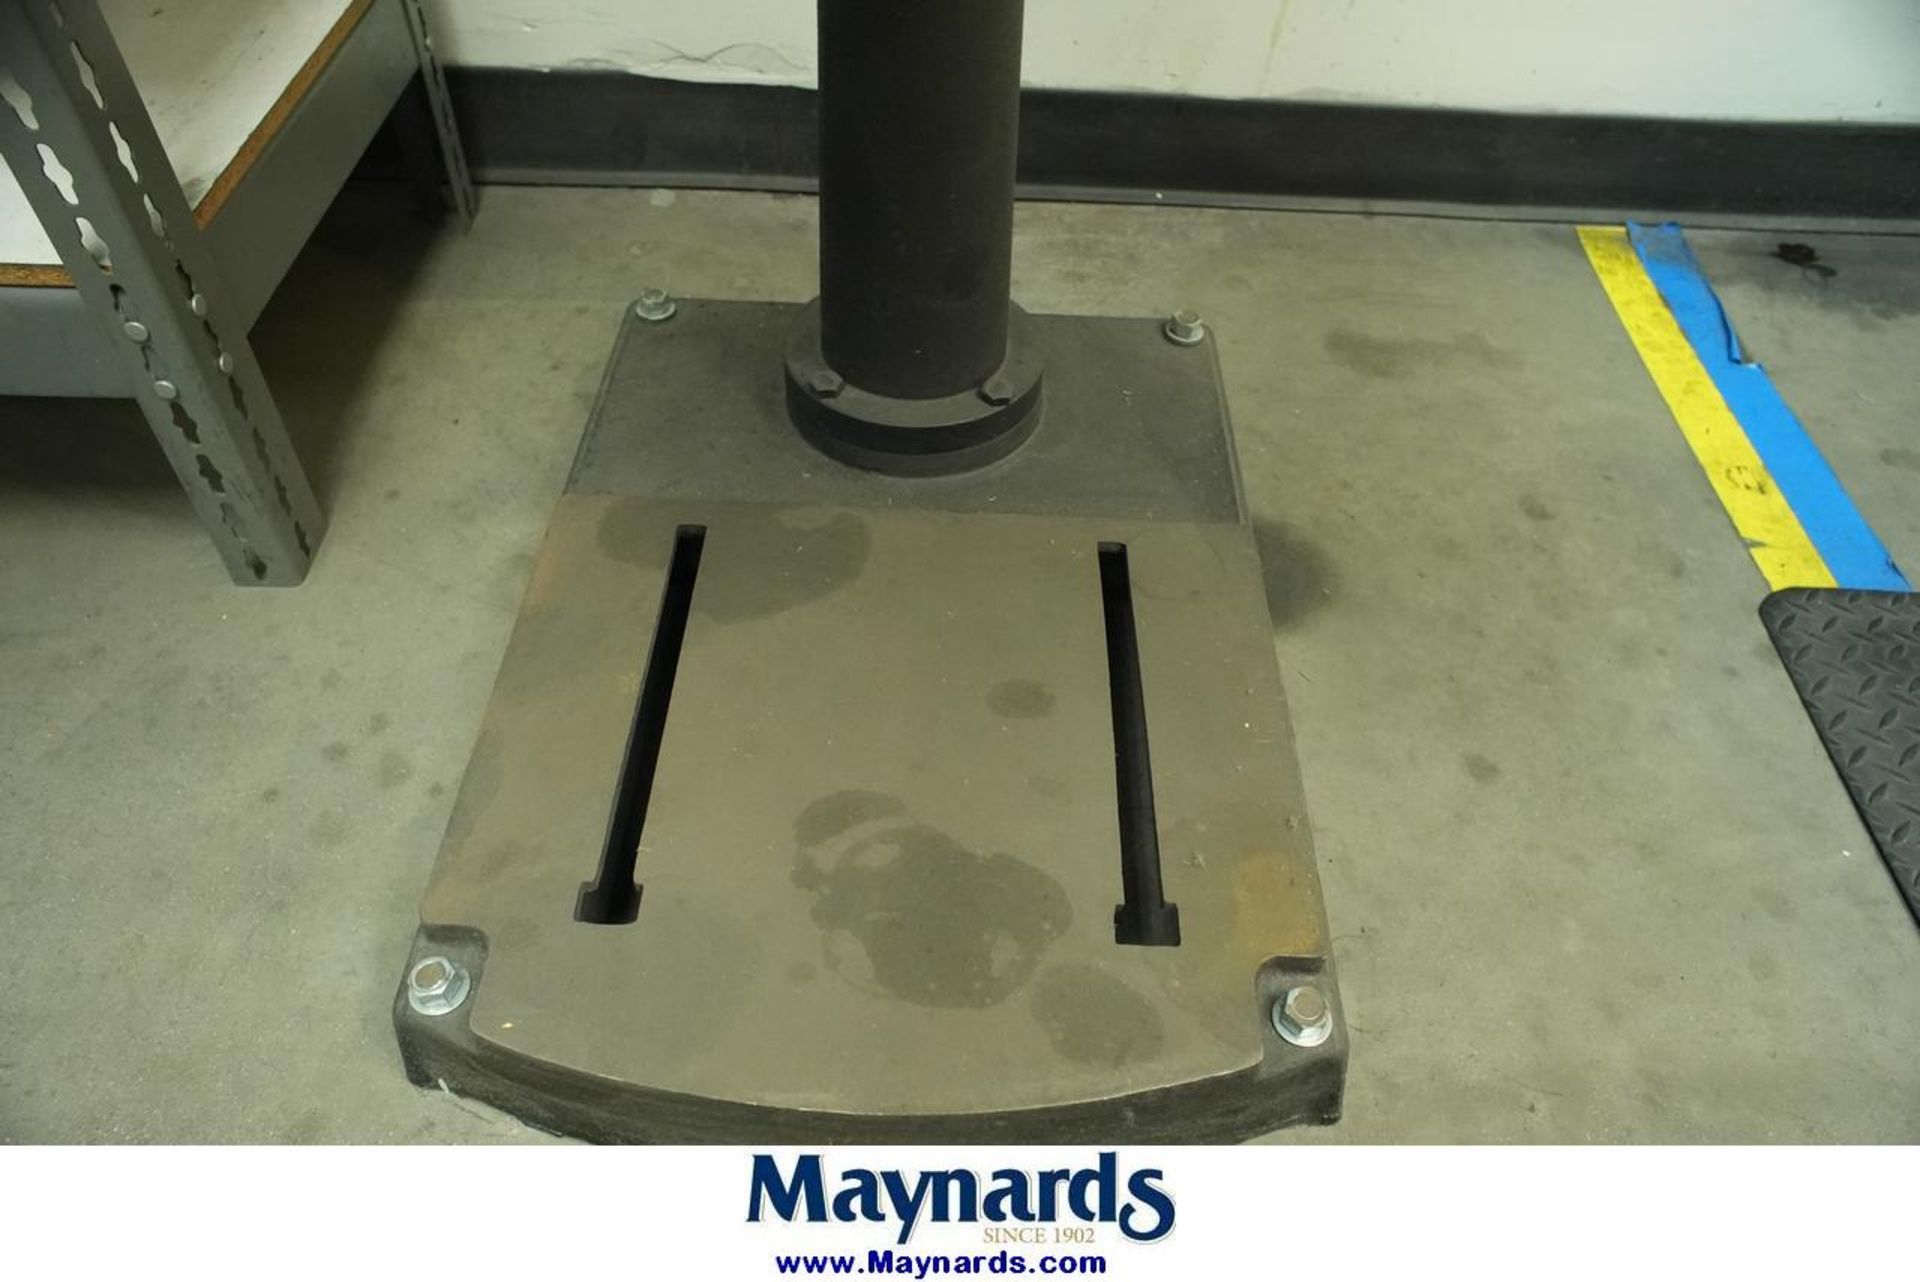 Westward 20" Floor Drill Press - Image 4 of 7